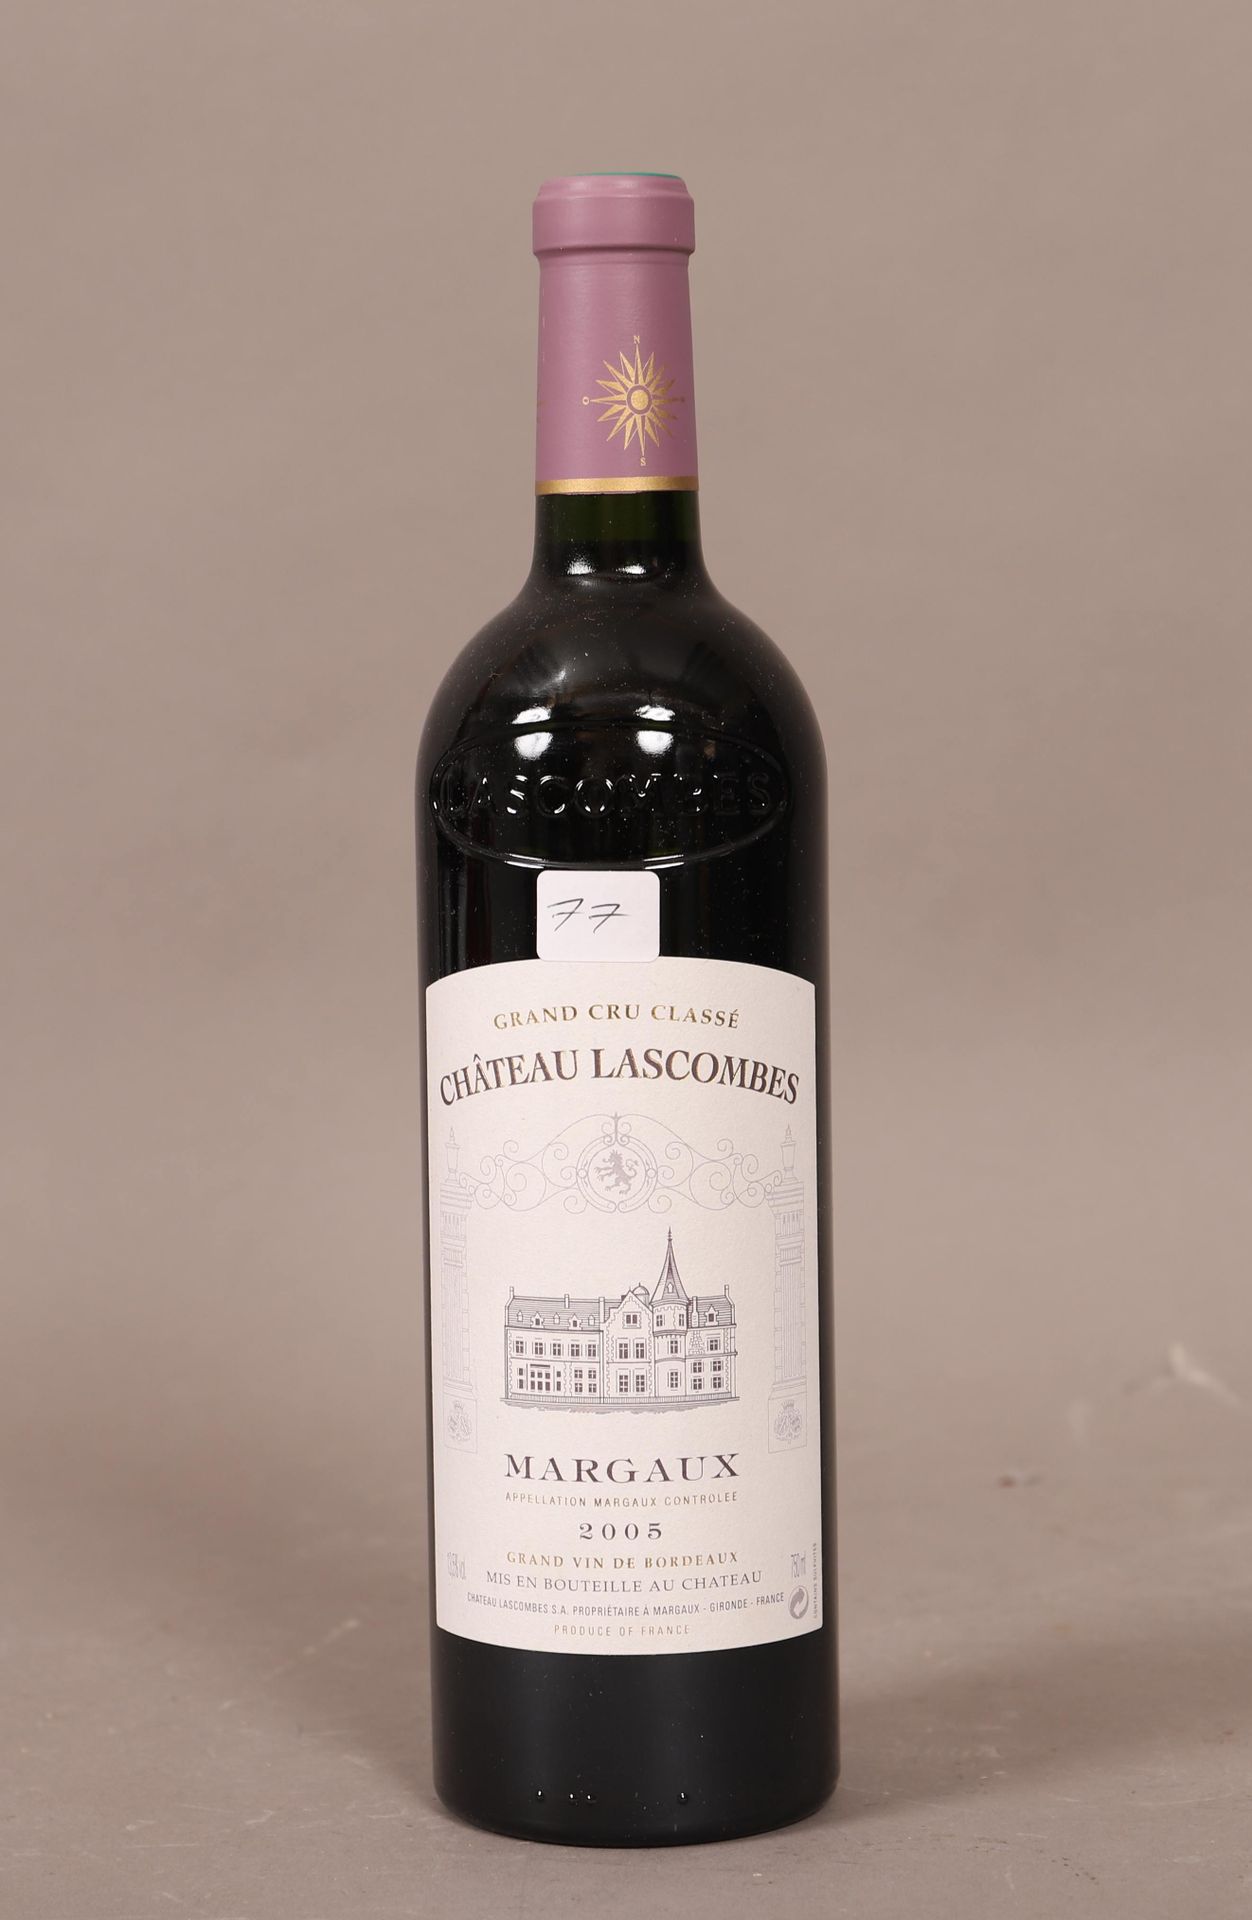 Null Château Lascombes (x1)

GCC

Margaux

2005

0,75L